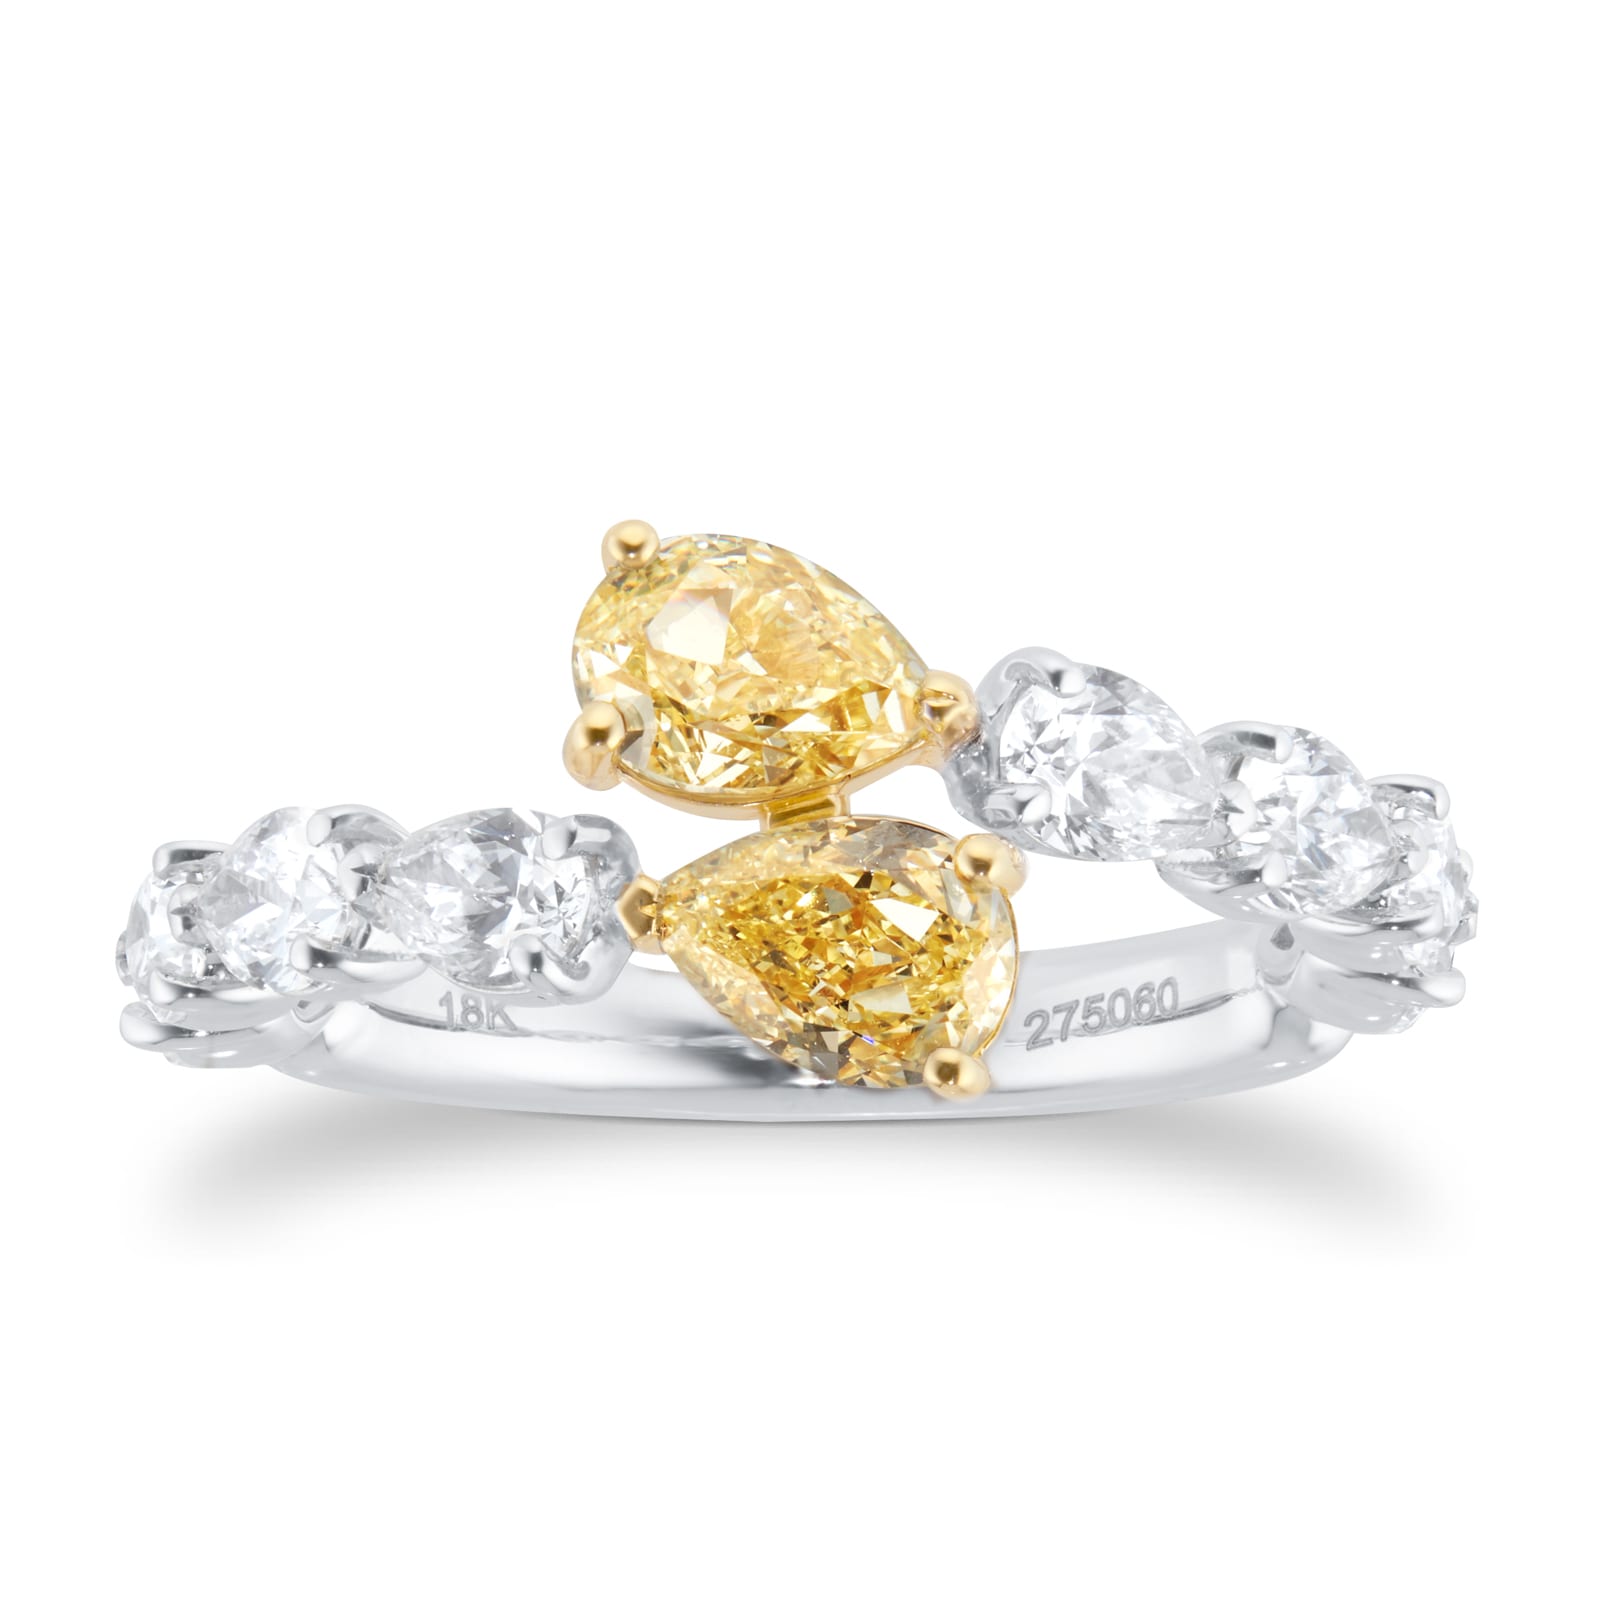 18ct Yellow & White Pear Cut Diamond Ring - Ring Size J